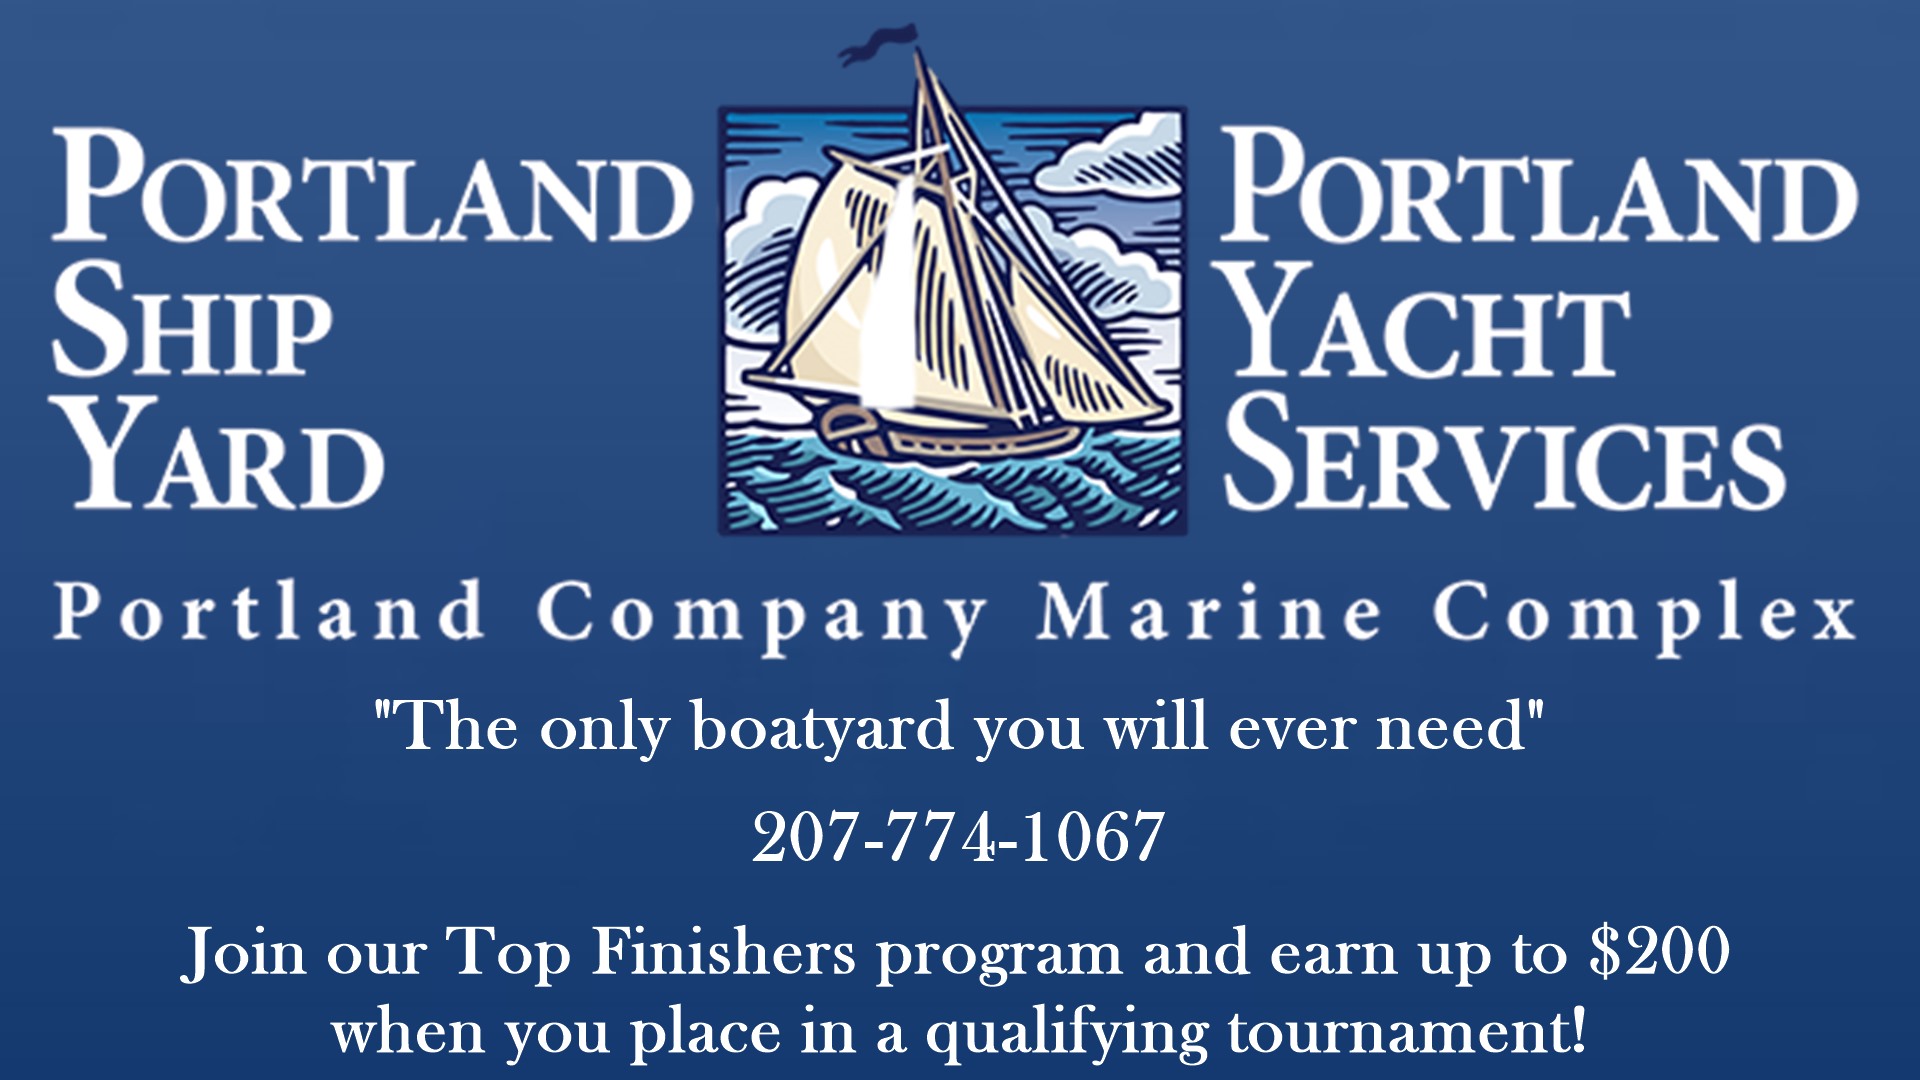 Portland Yacht Services